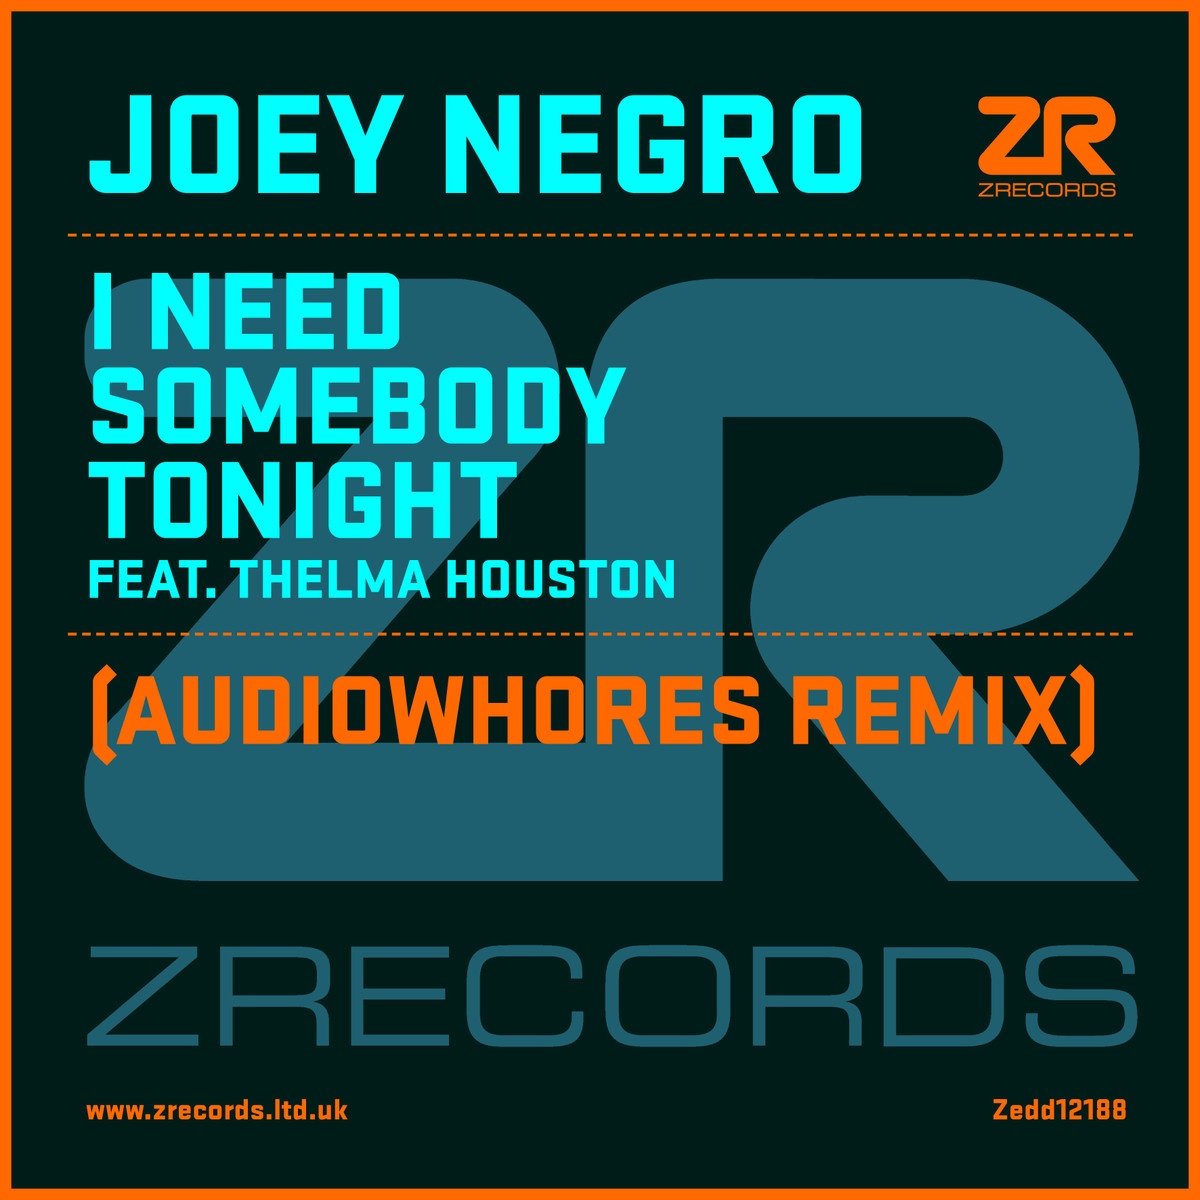 I Need Somebody Tonight Feat. Thelma Houston (Joey Negro Original Serious Mix)